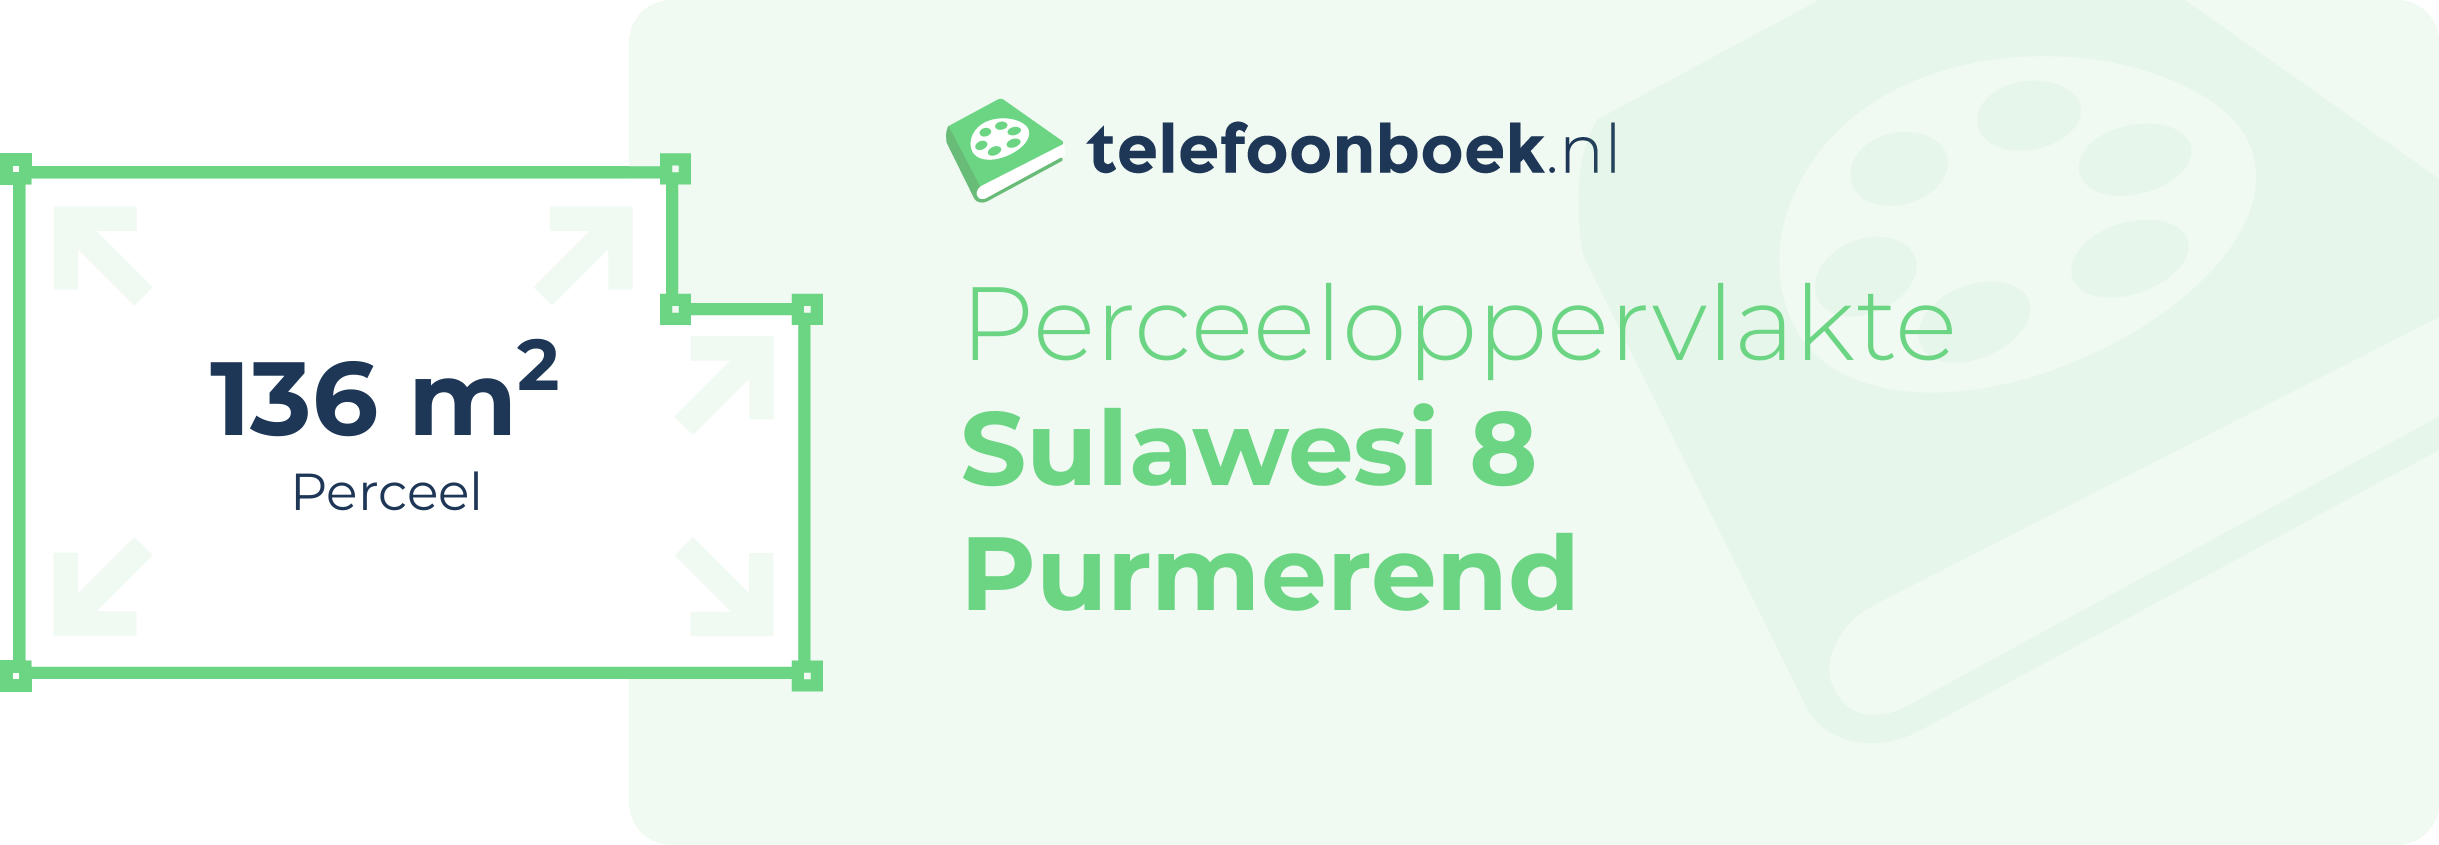 Perceeloppervlakte Sulawesi 8 Purmerend